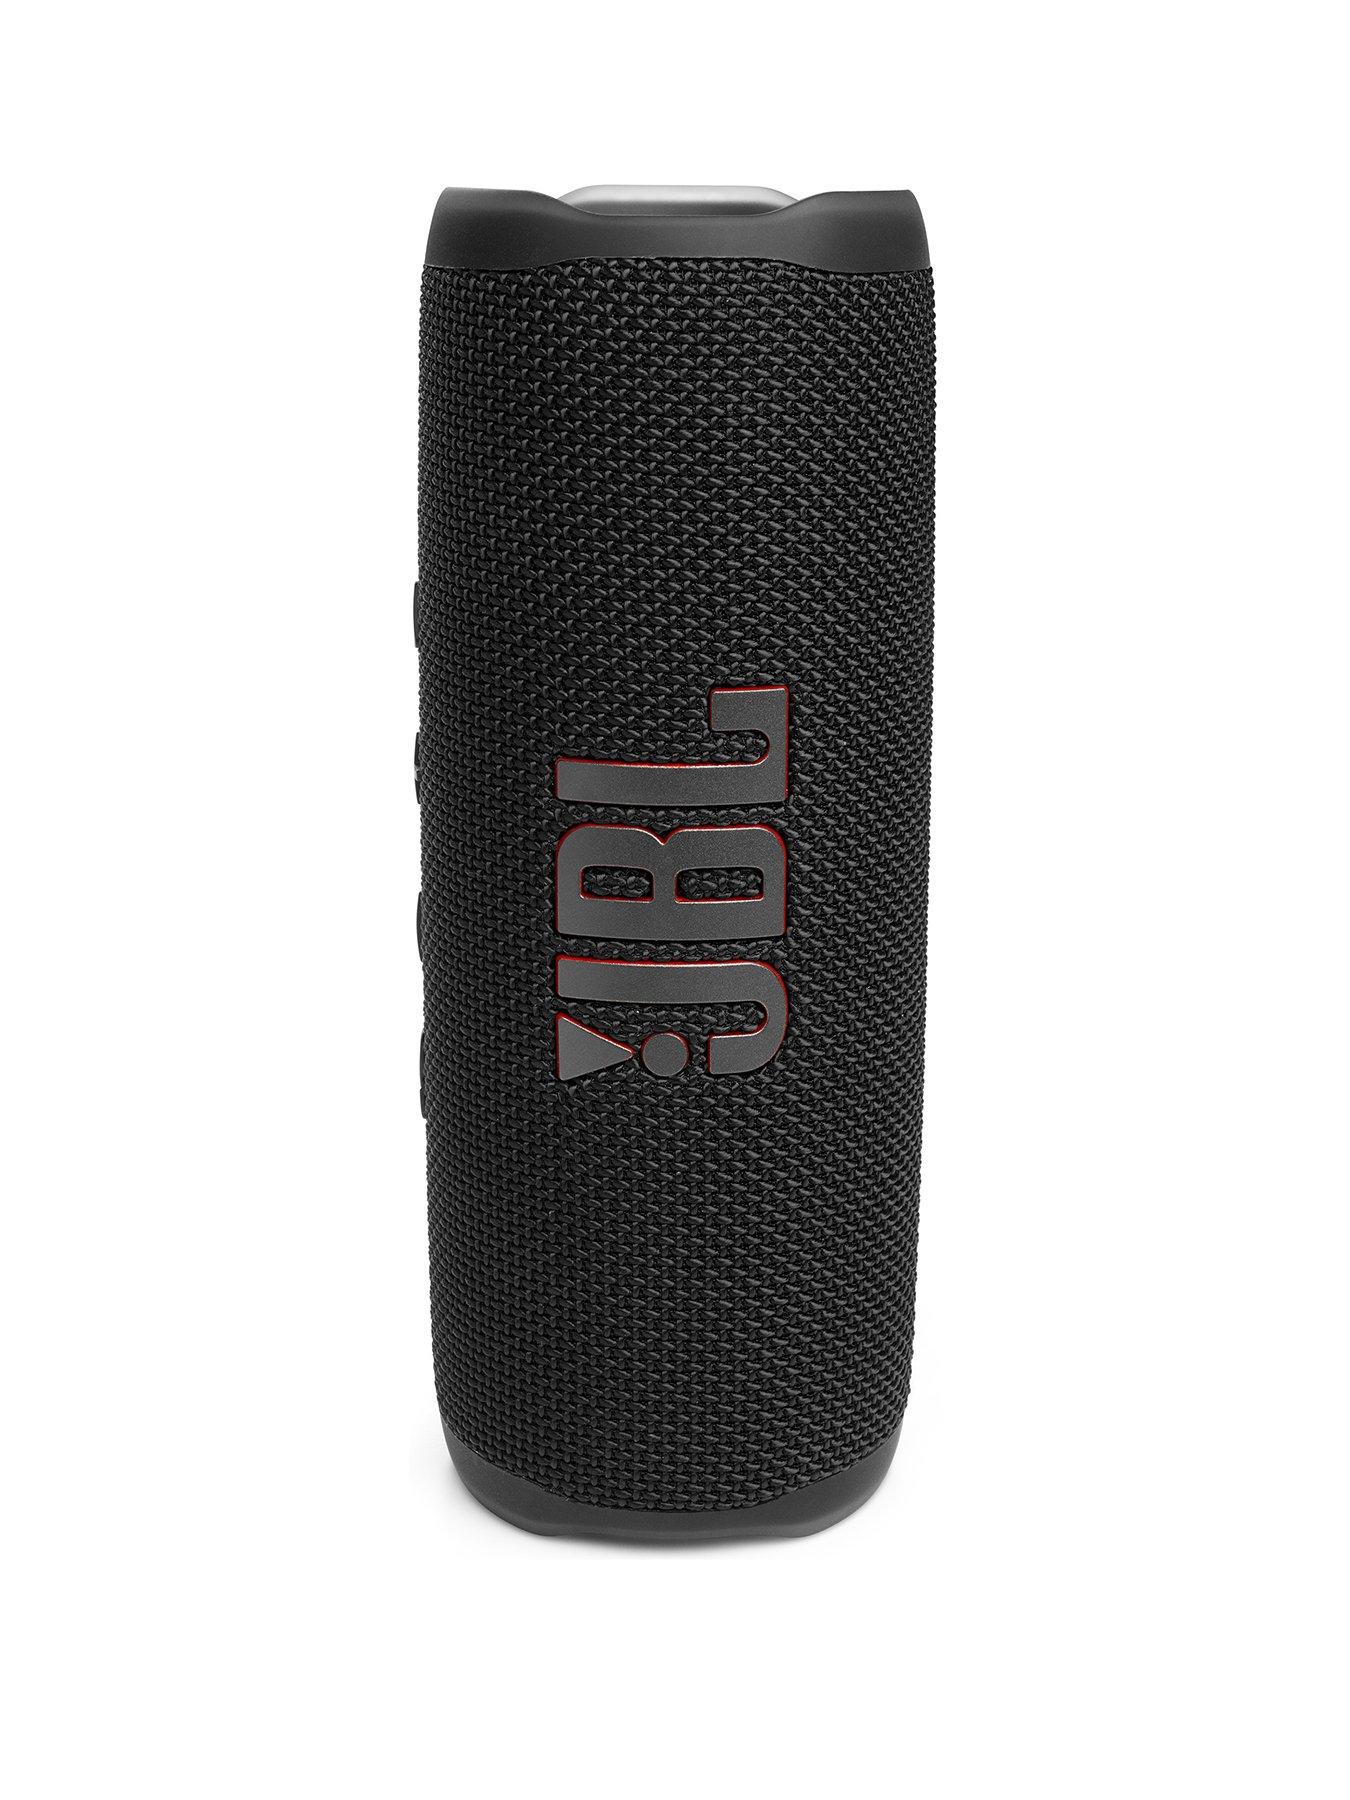 Jbl Flip 6 Portable Bluetooth Speaker - Black